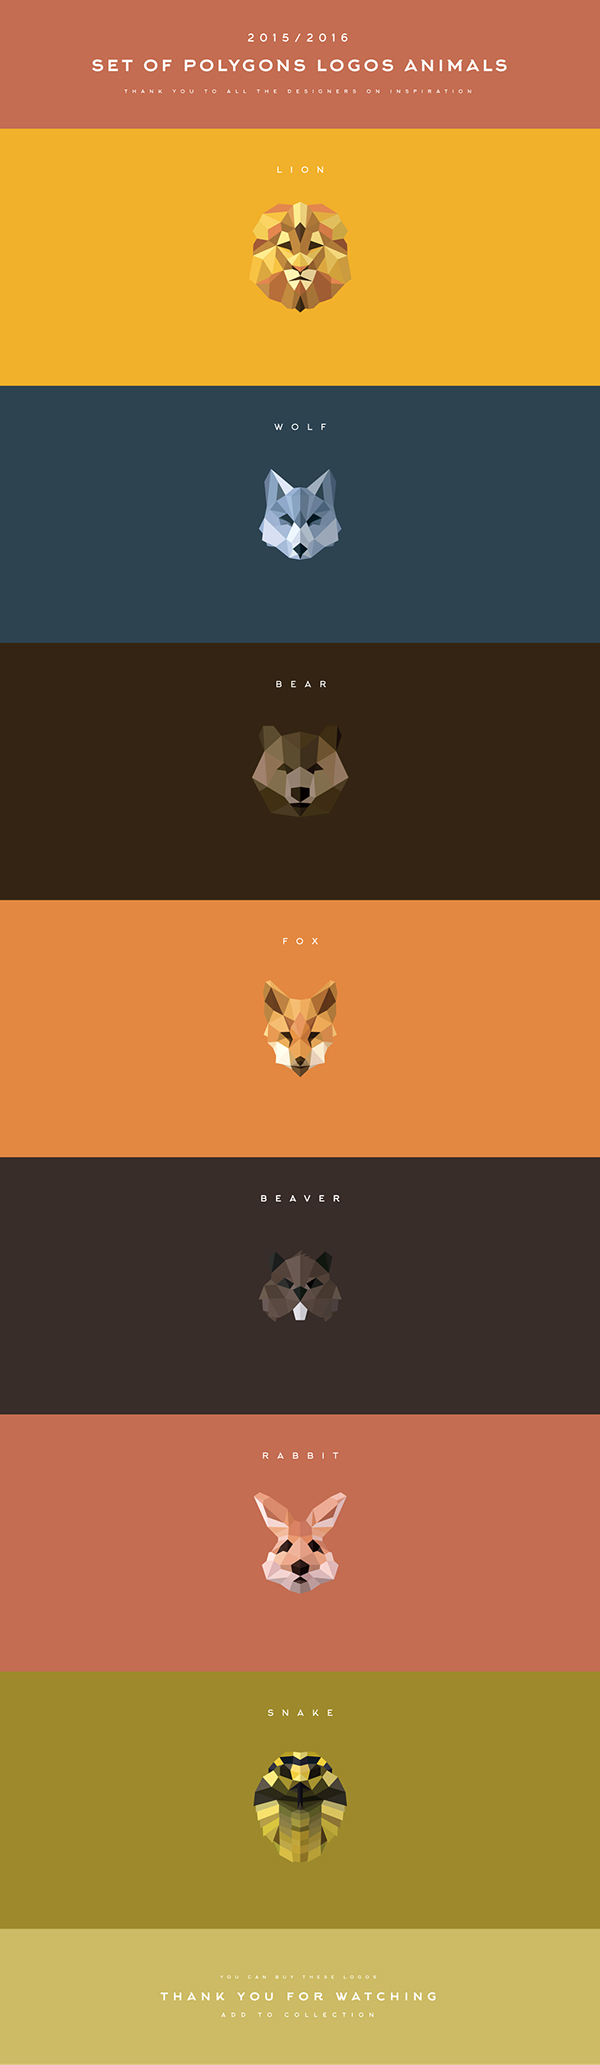 Set of Polygons Logos Animals 2015 / 2016